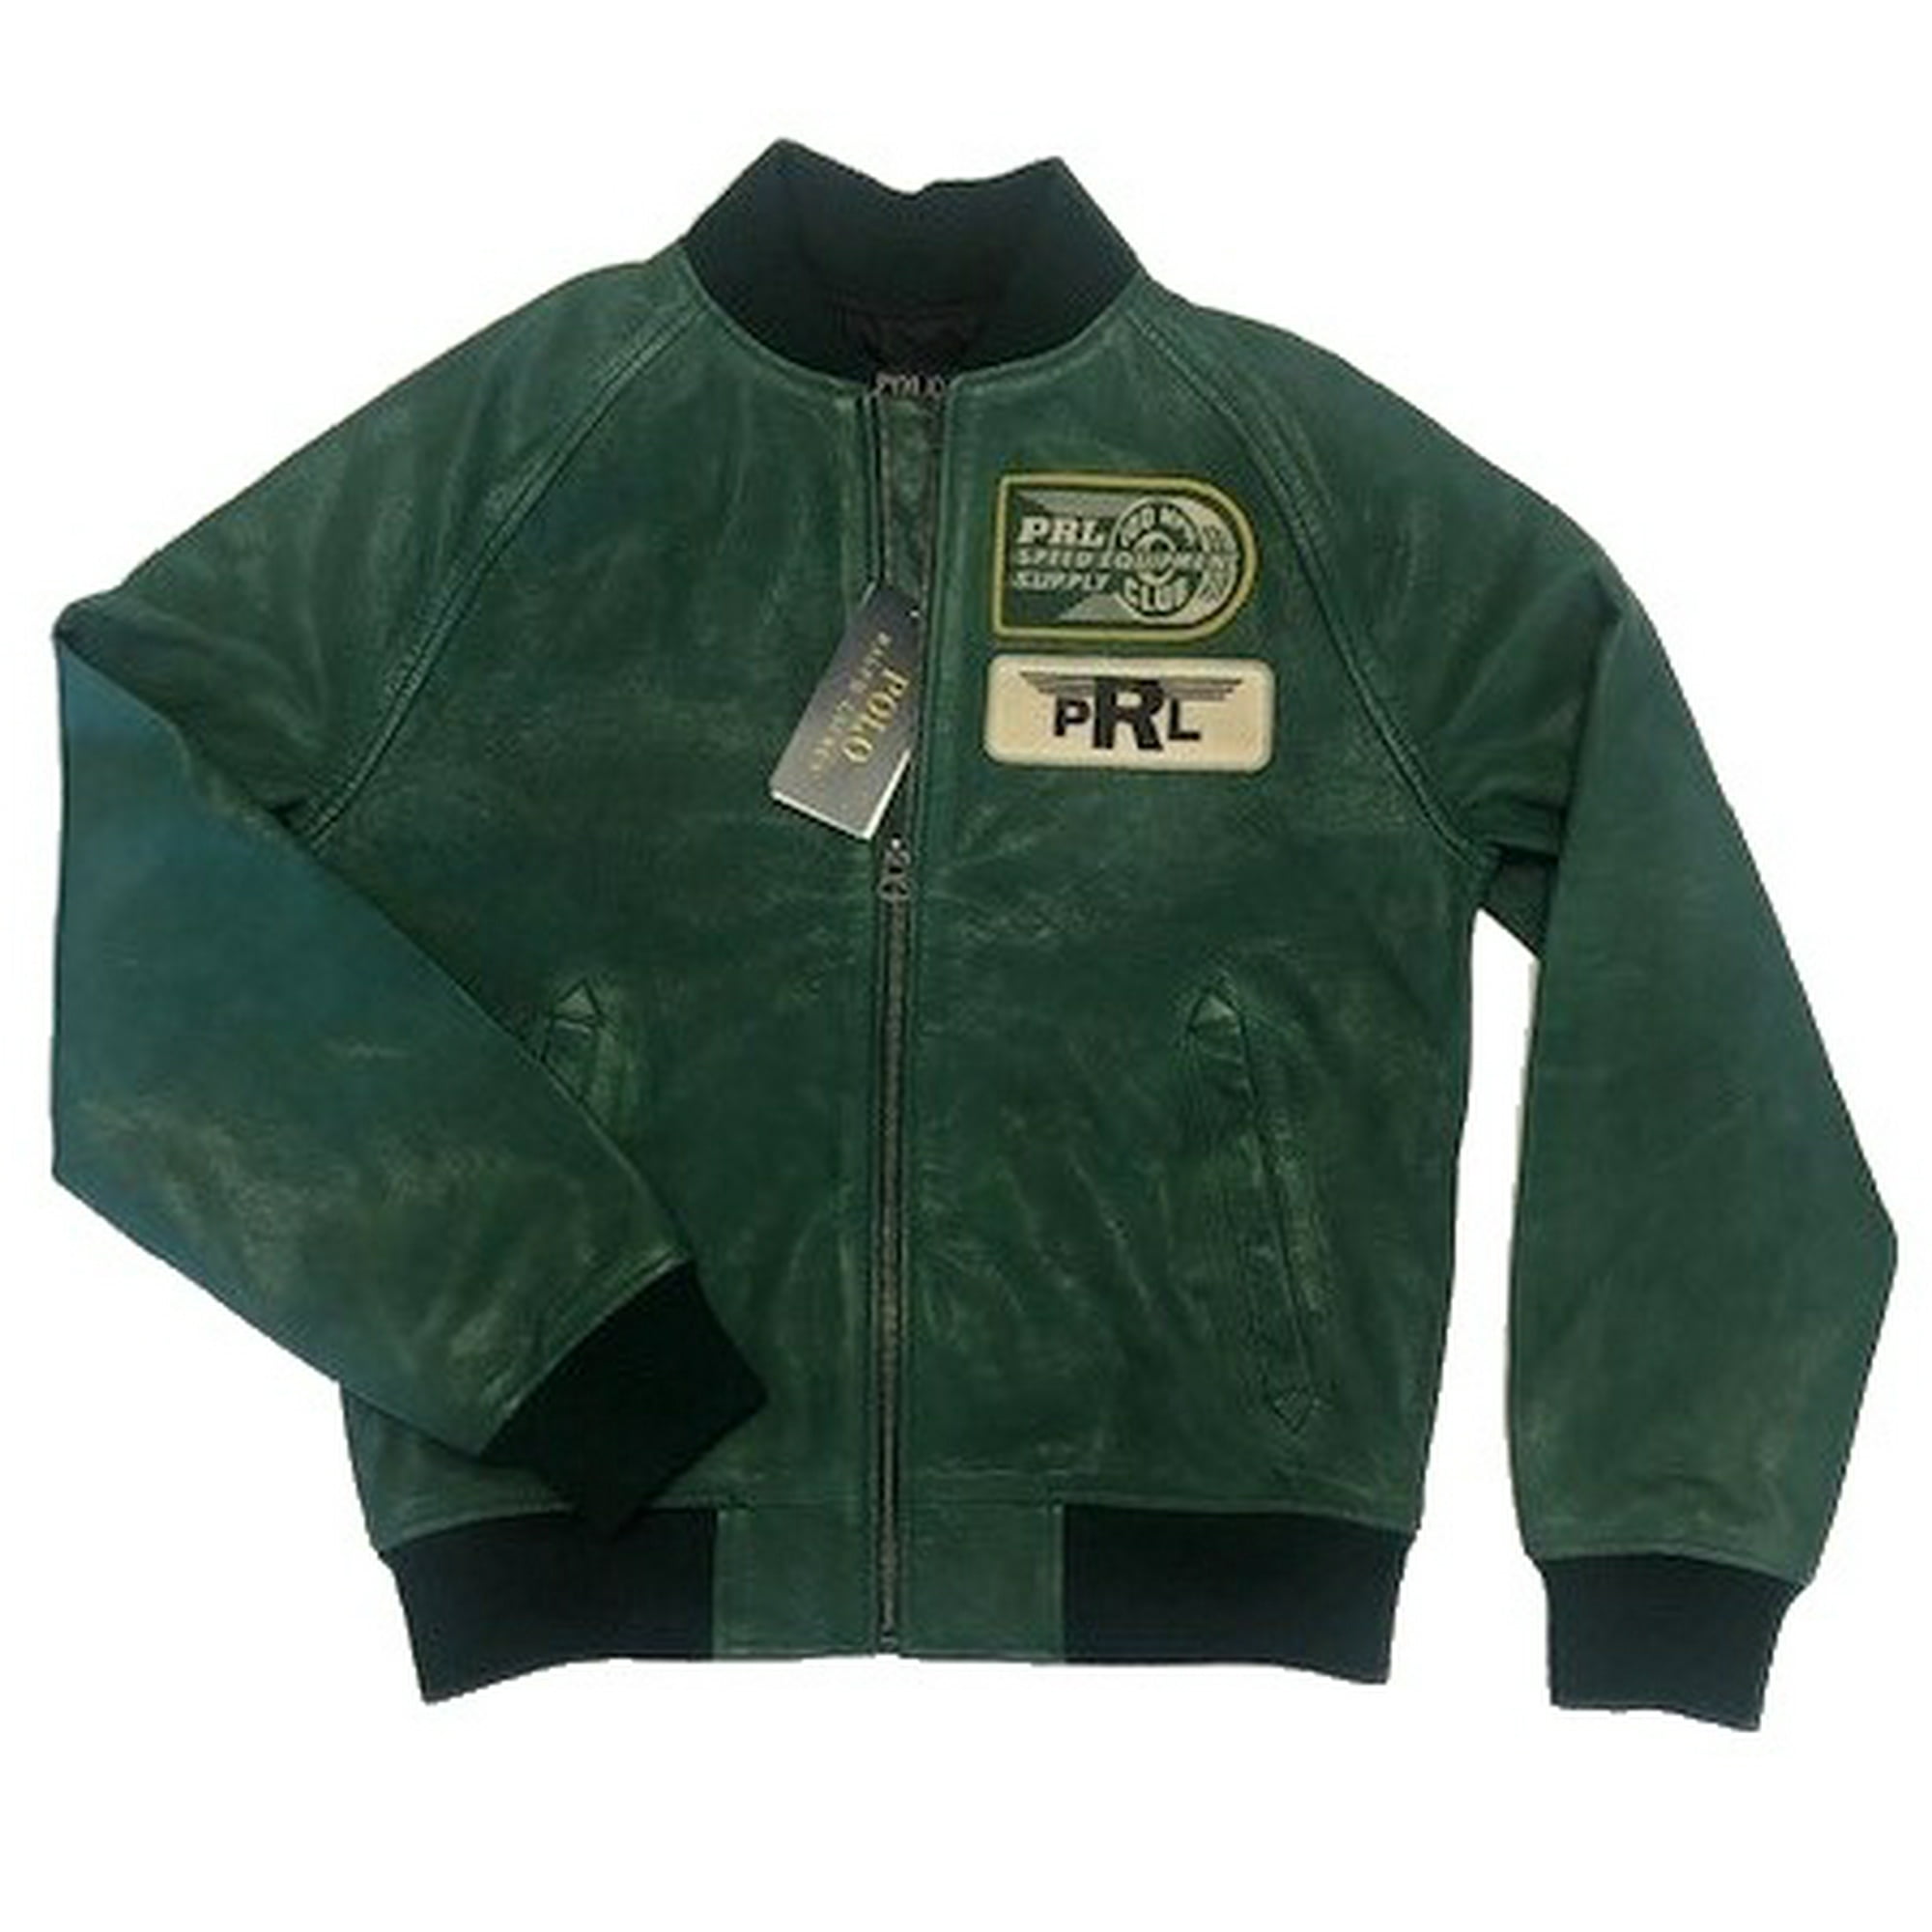 Polo Ralph Lauren Green Kids Leather Jacket, Medium (10-12